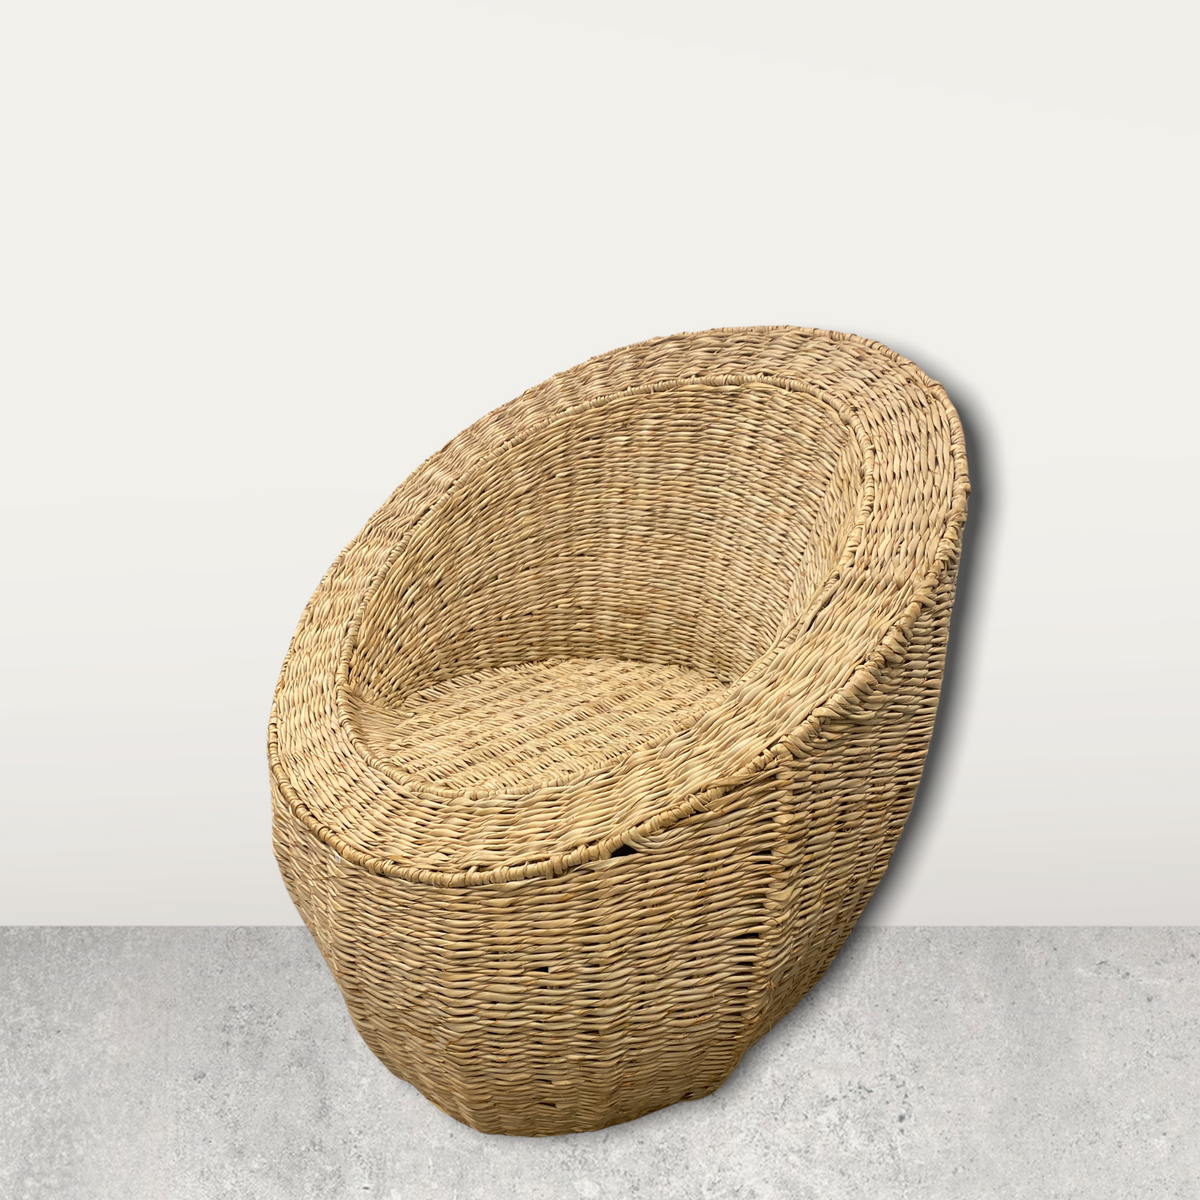 Handwoven Palm Leaf chair - Mozambique